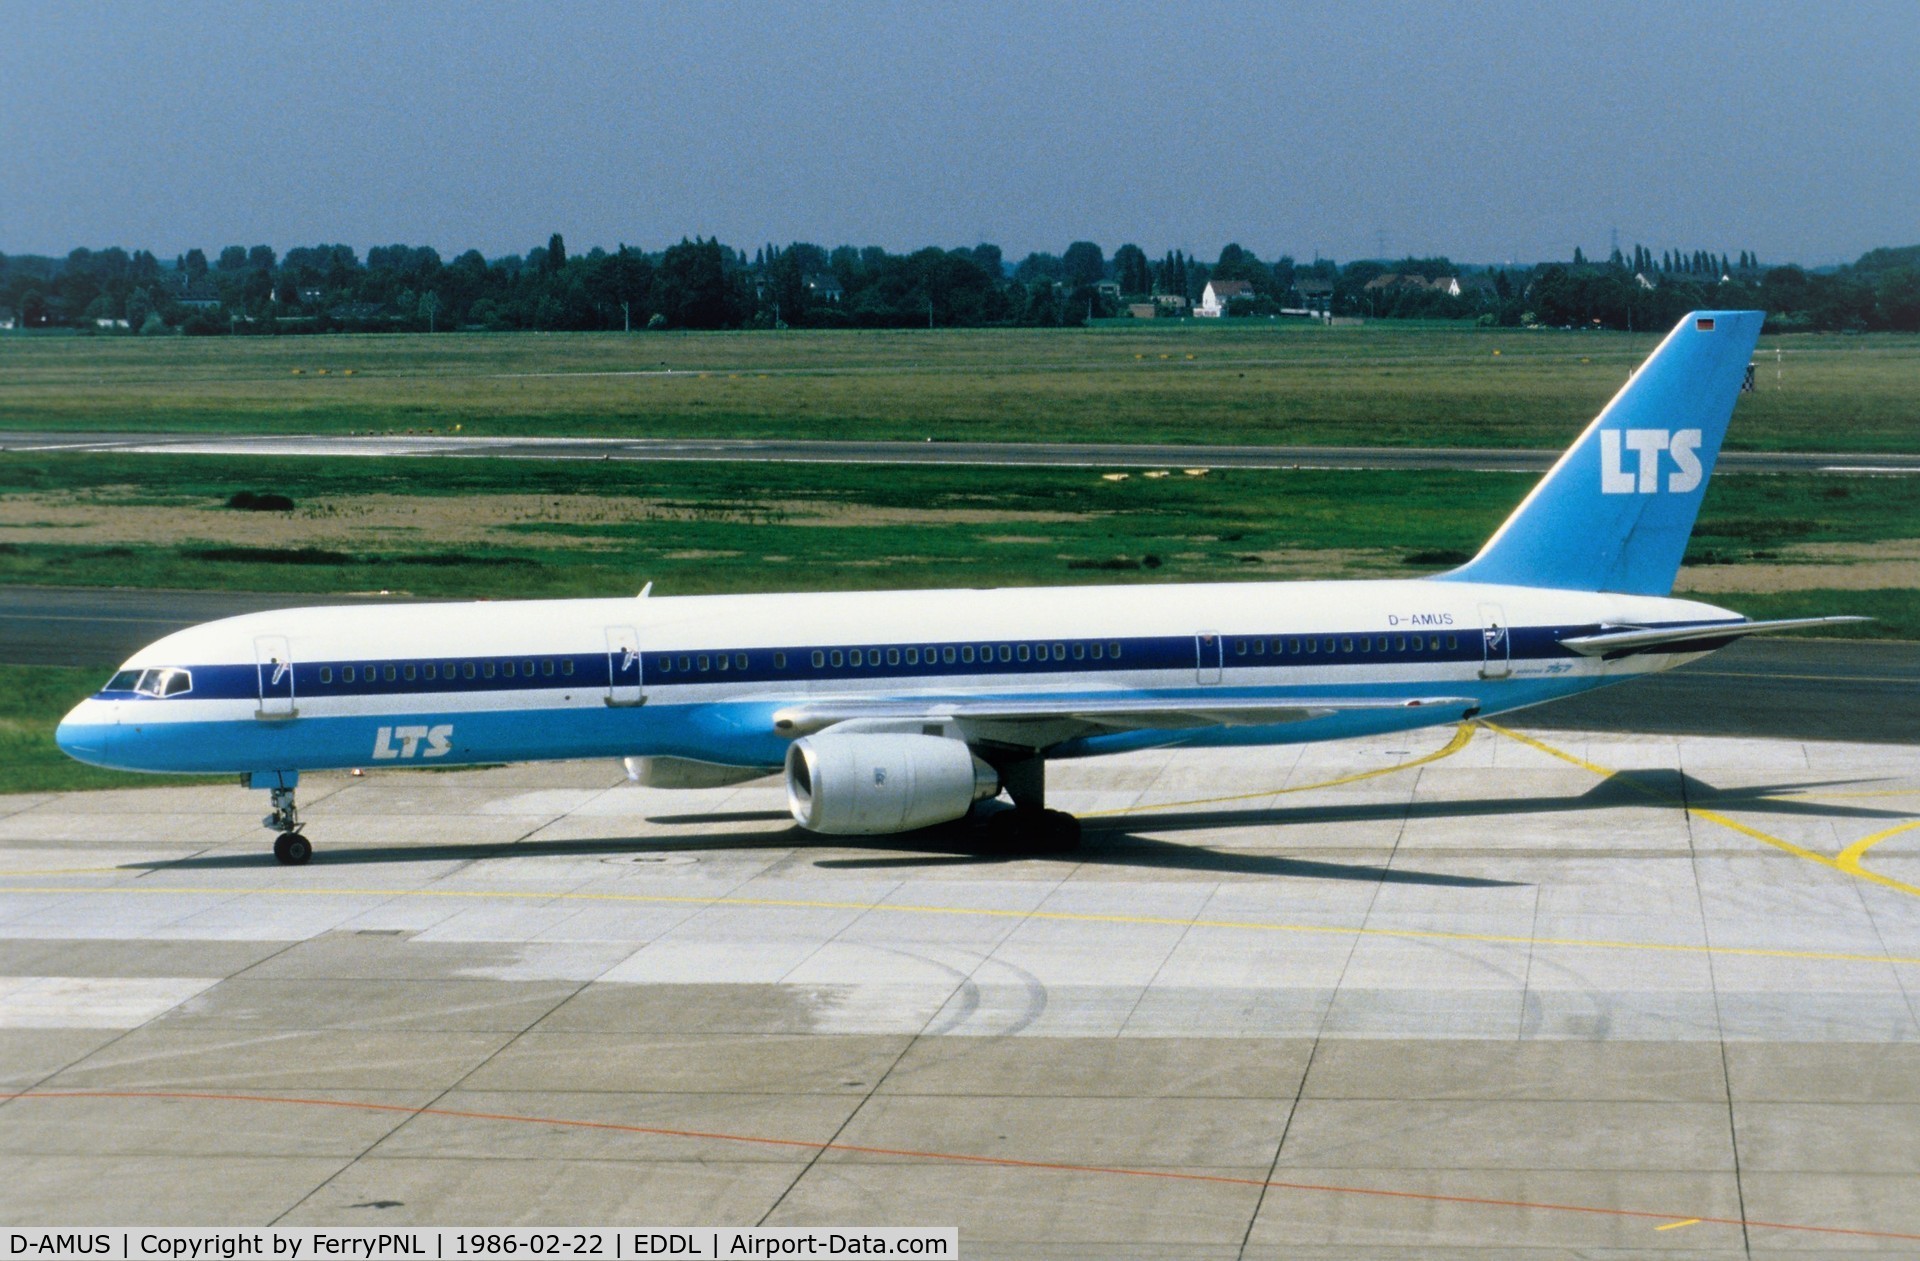 D-AMUS, 1984 Boeing 757-2G5 C/N 23119, LTS B752 entering terminal area